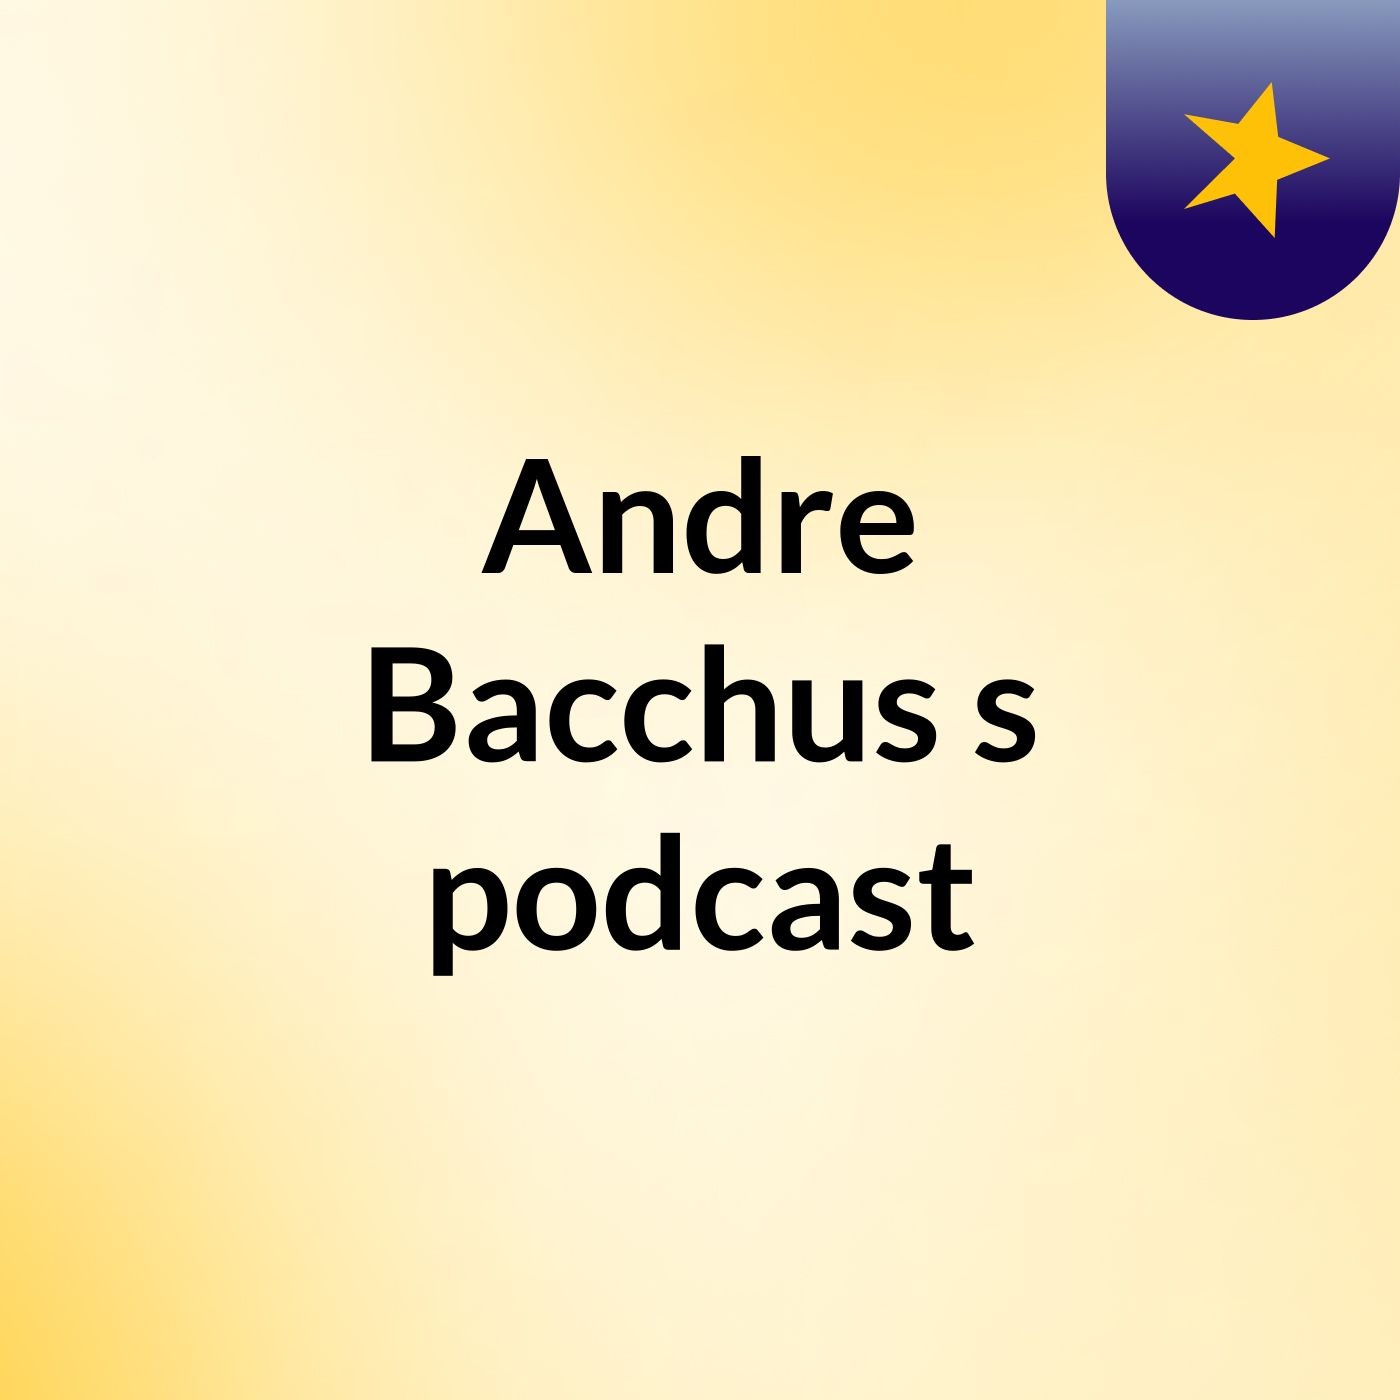 Episode 21 - Andre Bacchus's podcast